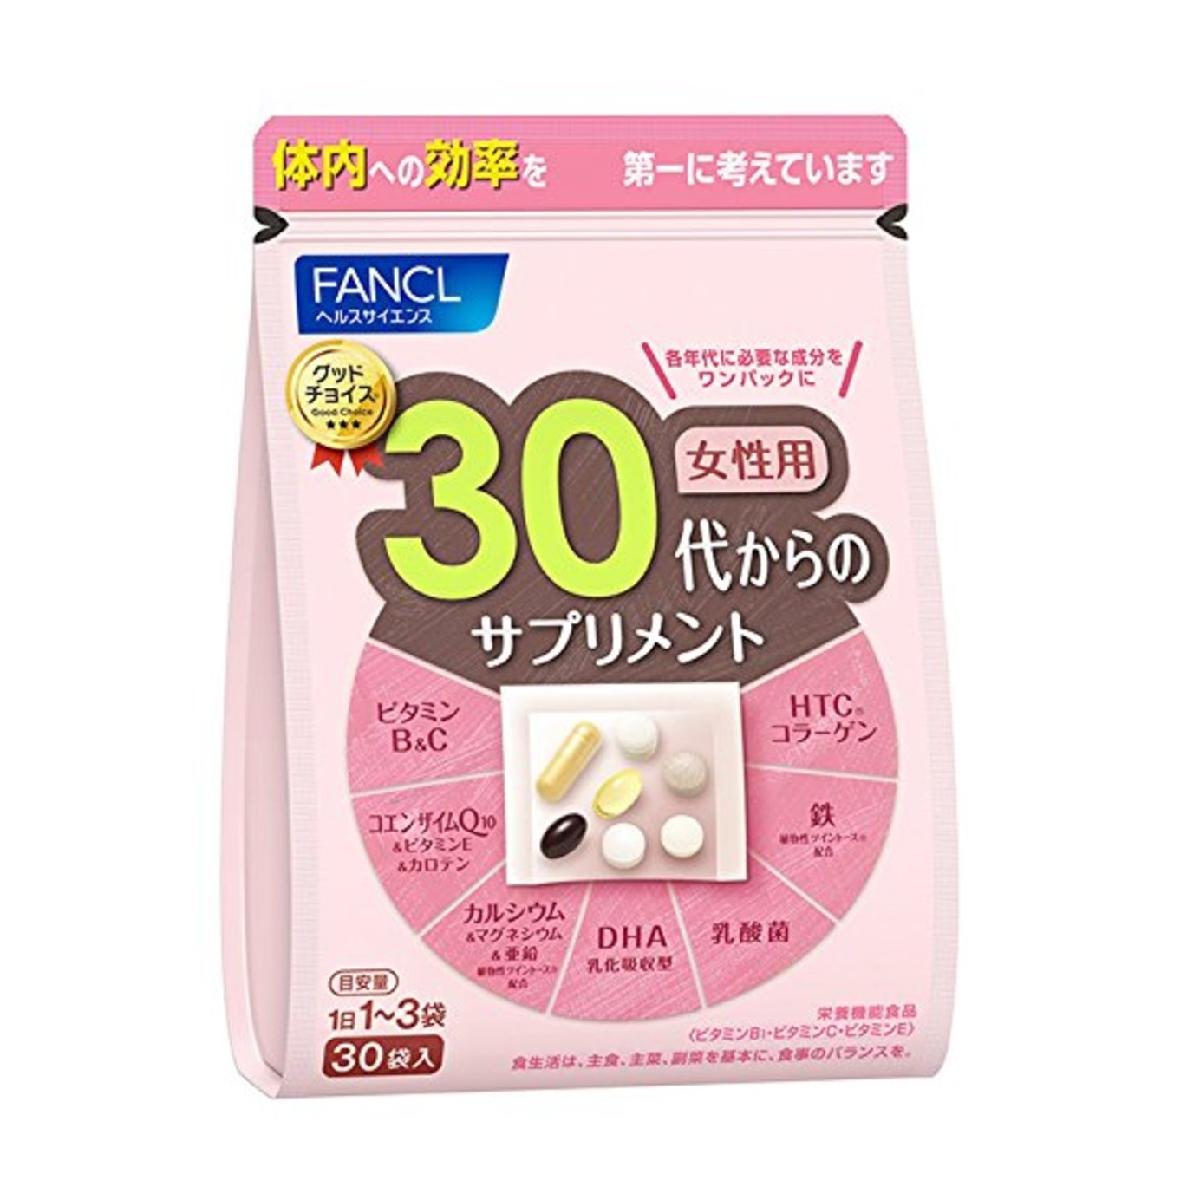 Fancl 30代女性綜合營養維他命補充丸 30小包 香港電視hktvmall 網上購物